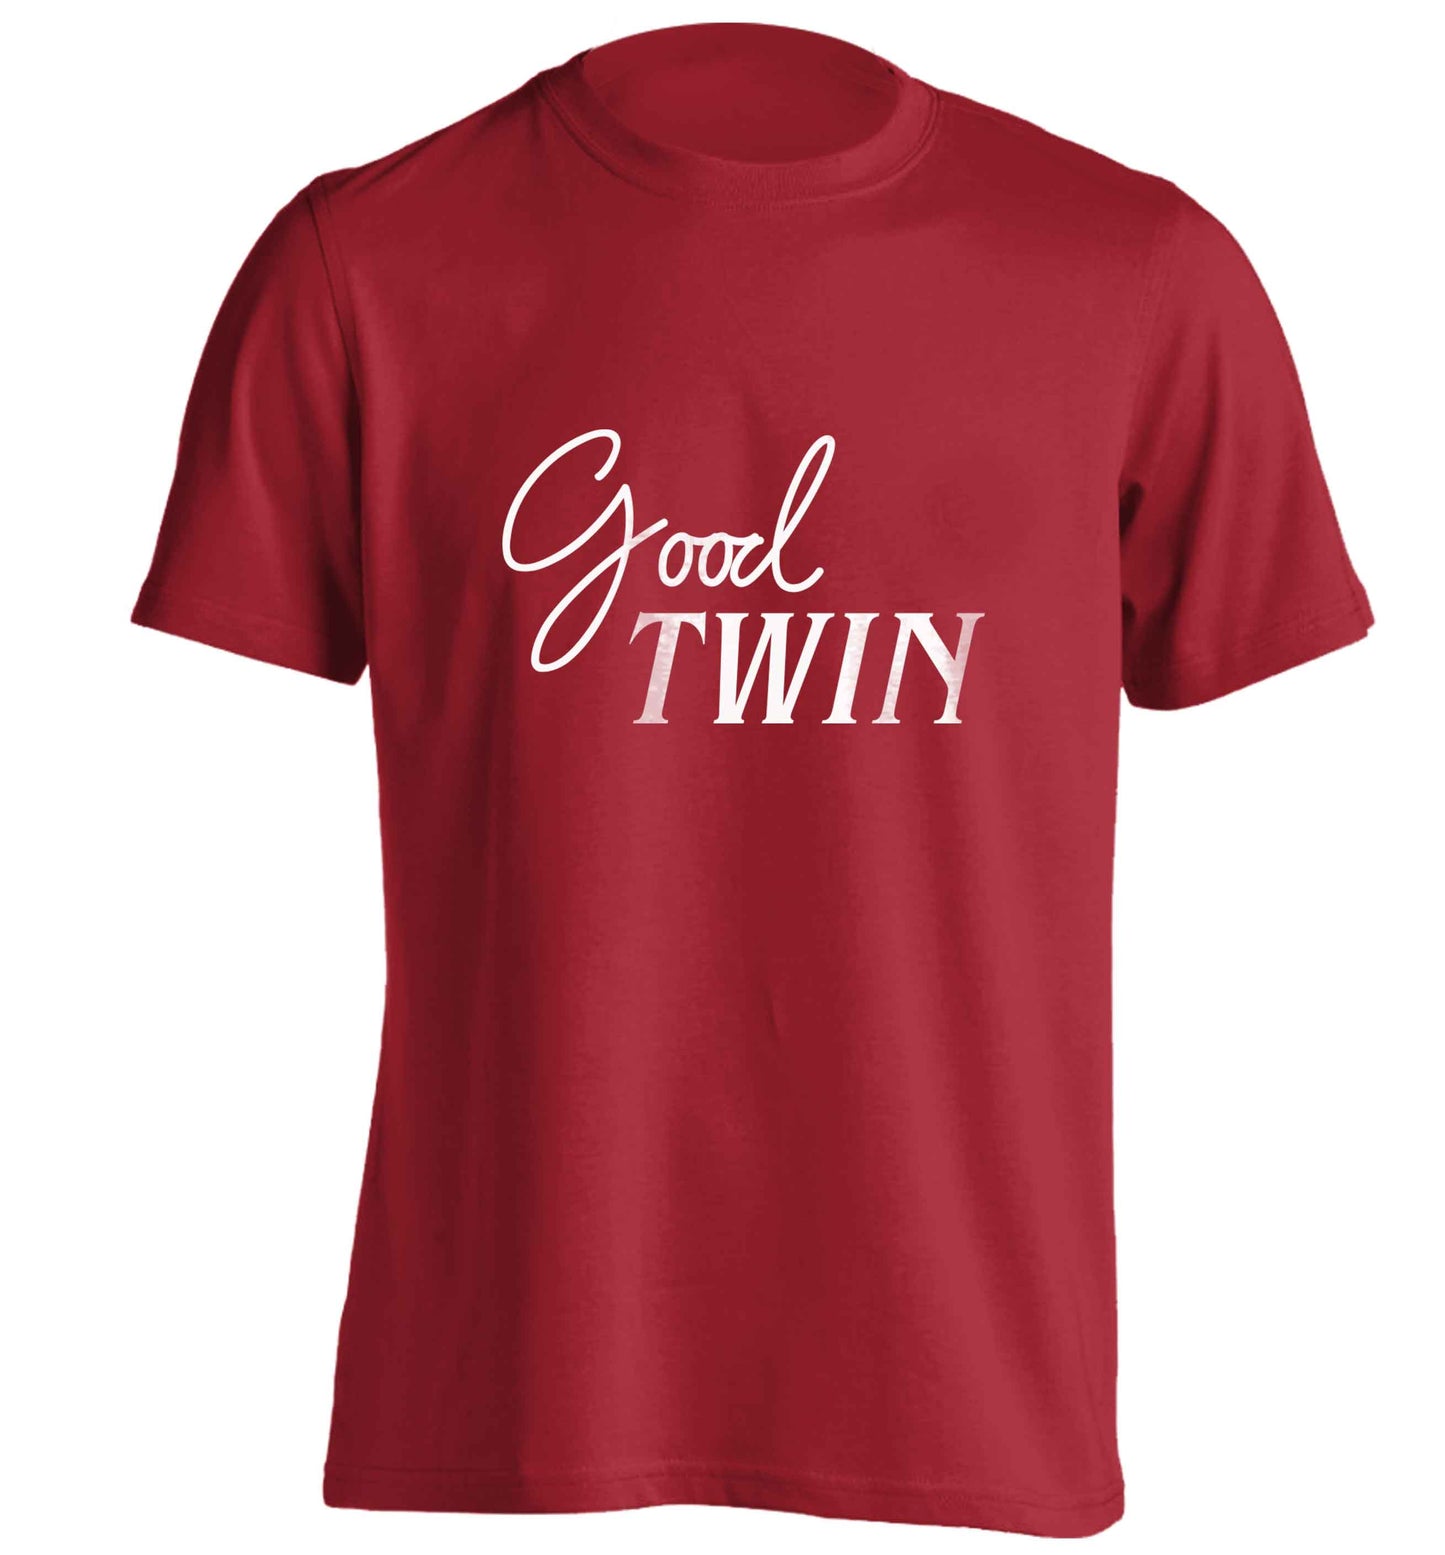 Good twin adults unisex red Tshirt 2XL